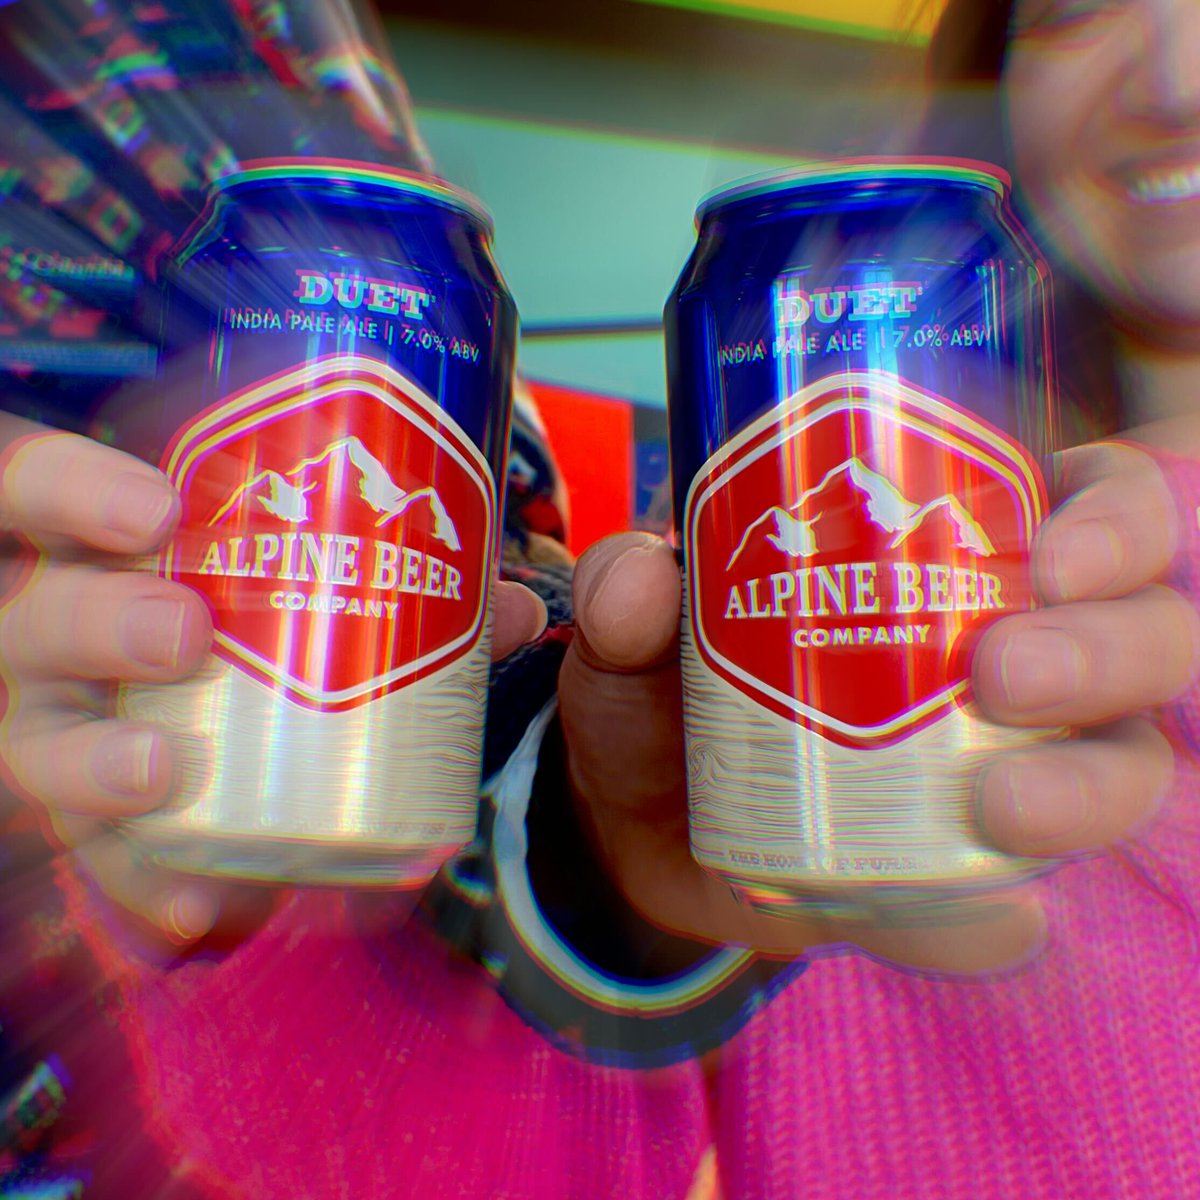 Are you seeing double? #DuetAllNightLong #AlpineBeerCo